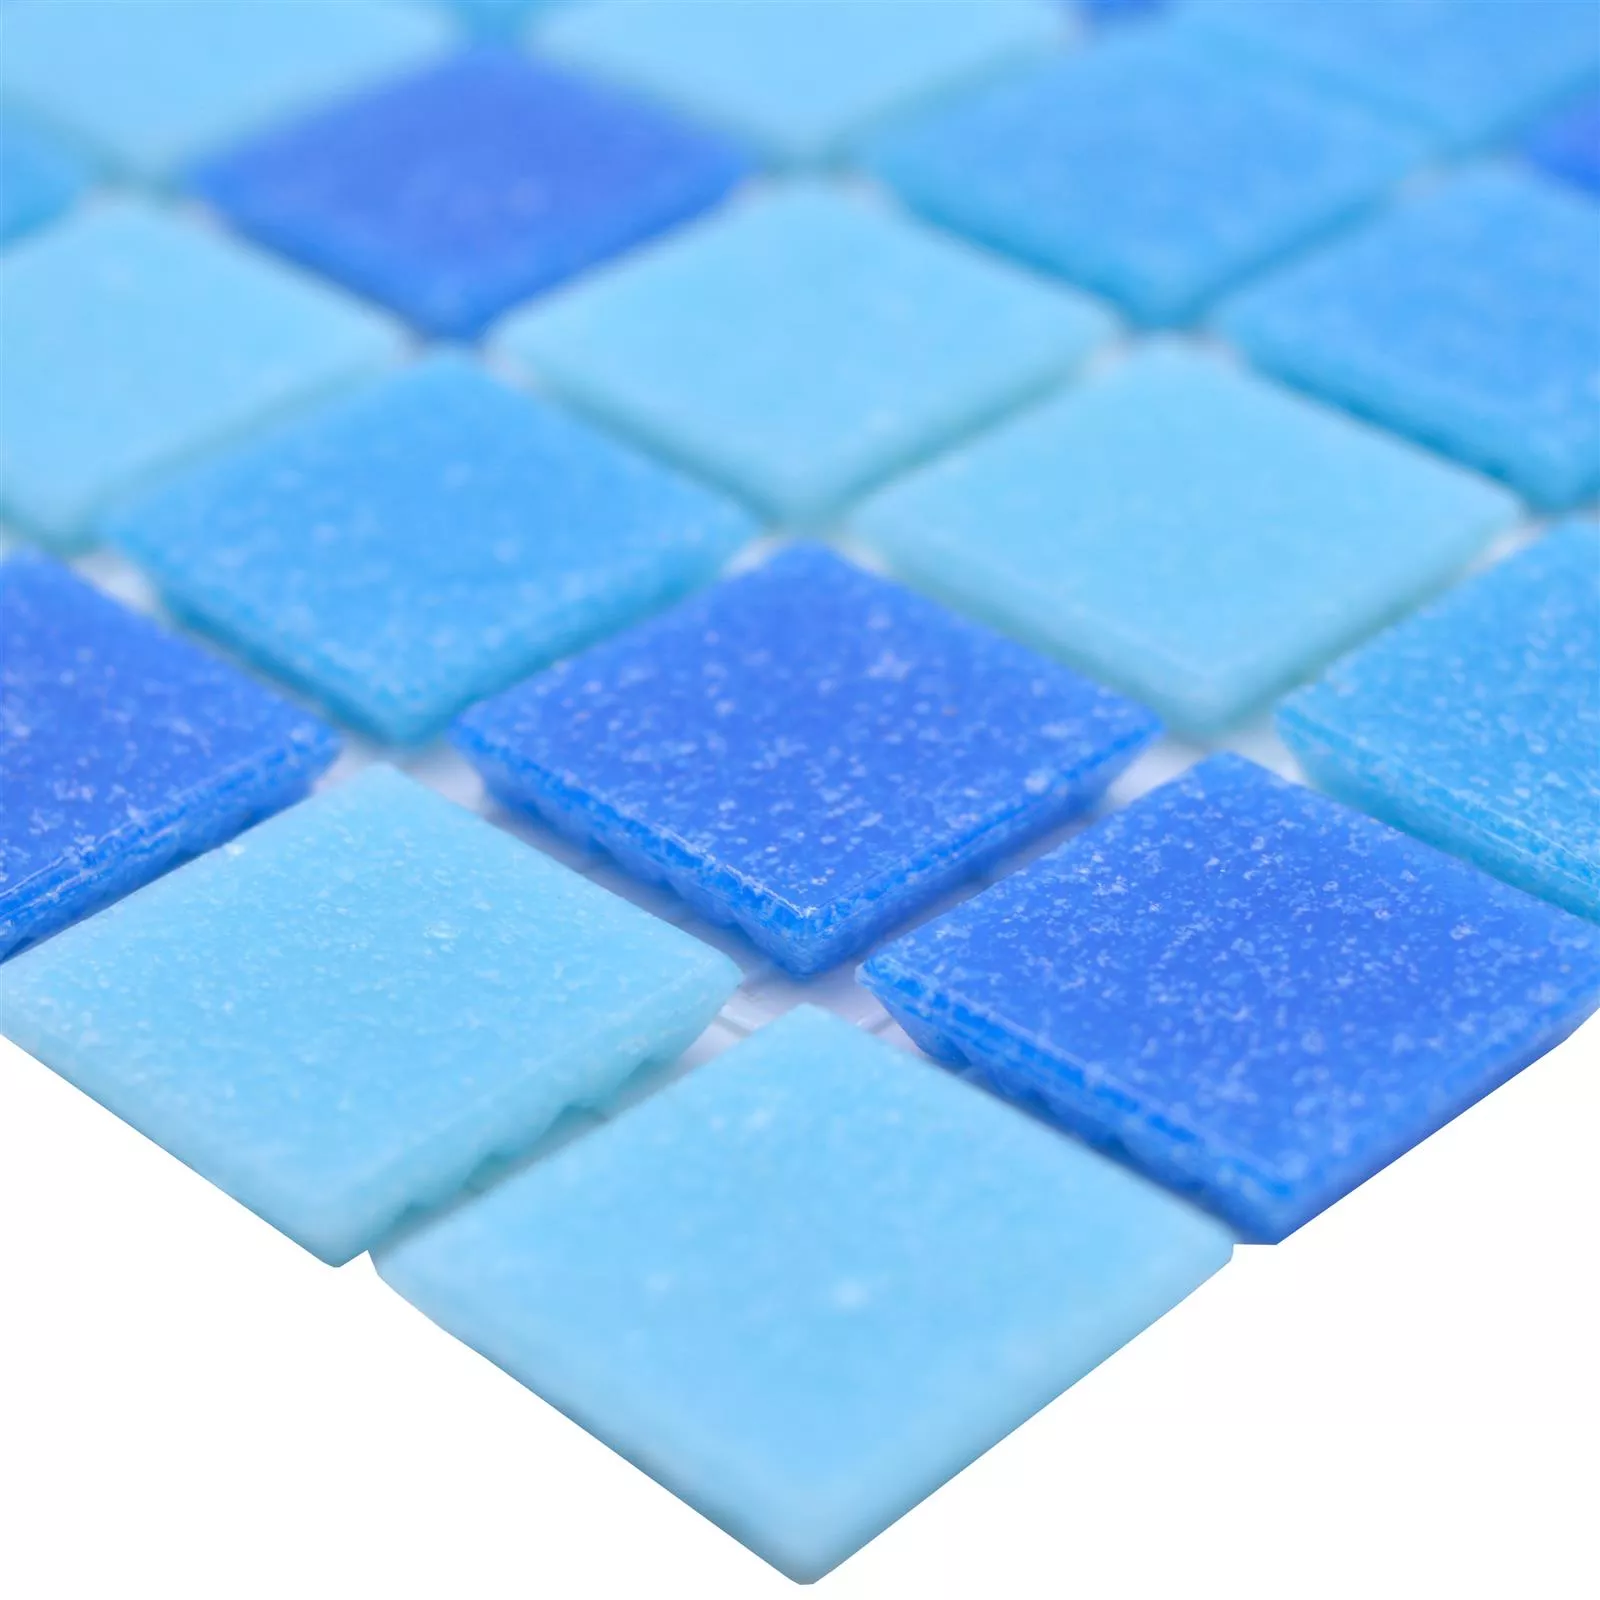 Sample Swimming Pool Mosaic North Sea Blue Cyan Mix